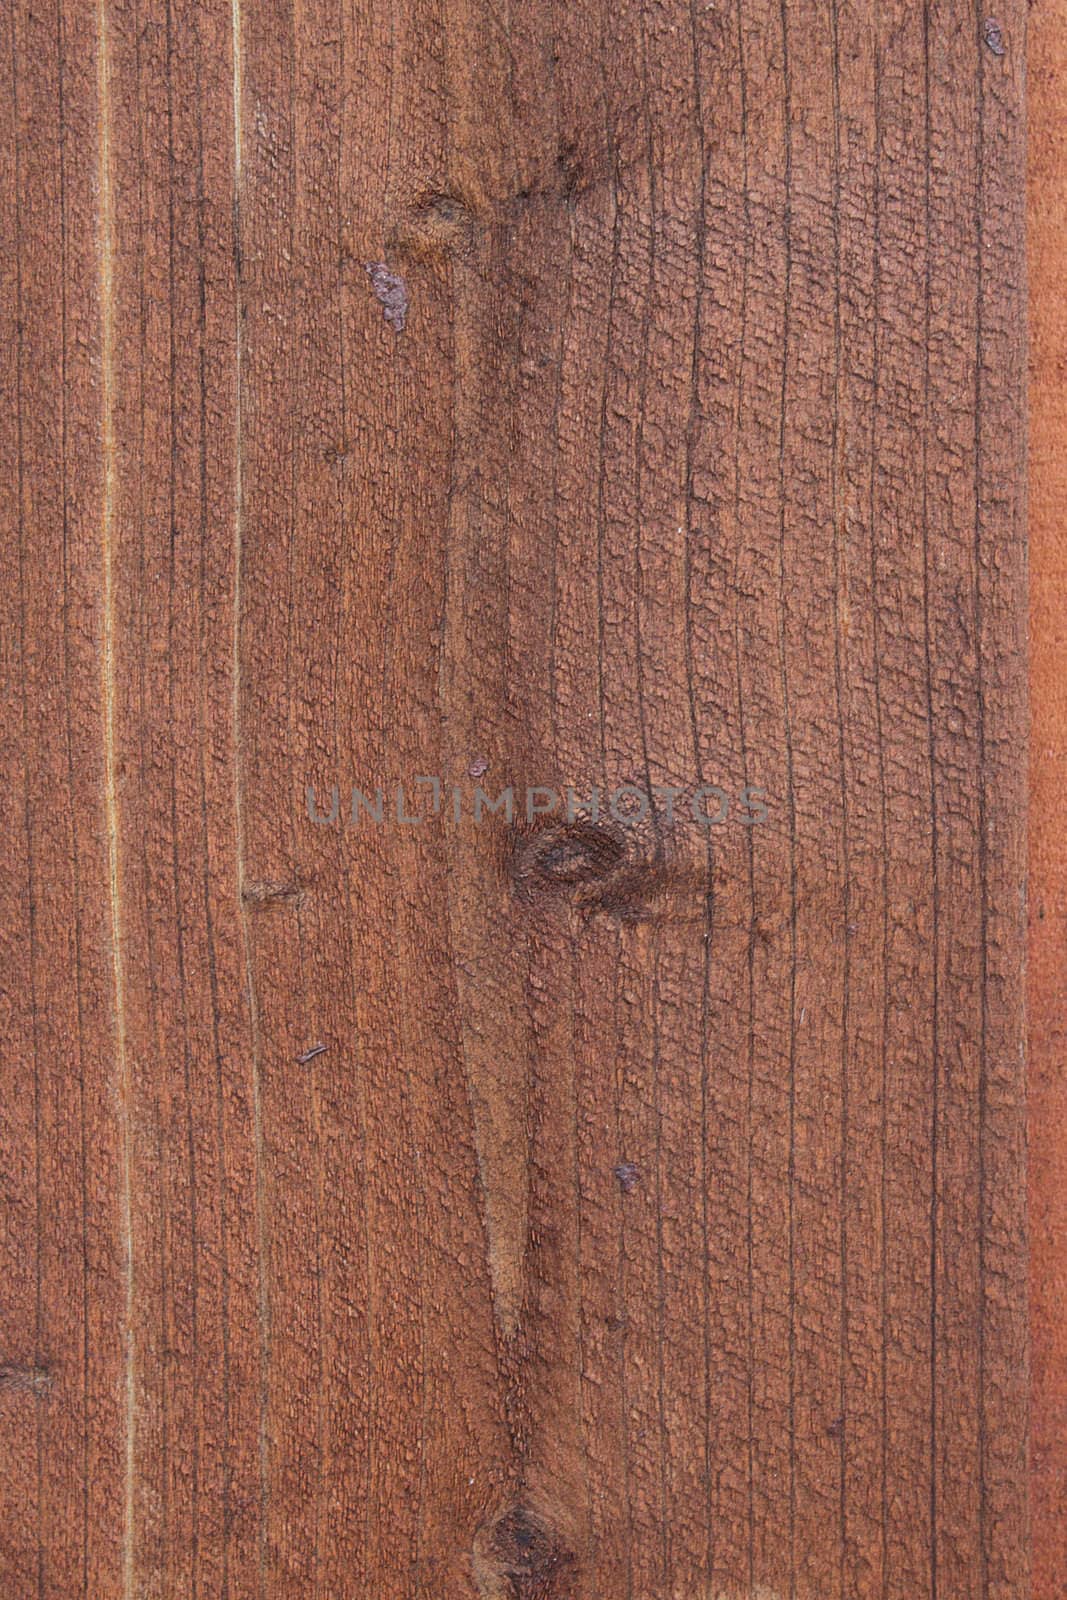 Closeup of brown weathered wood